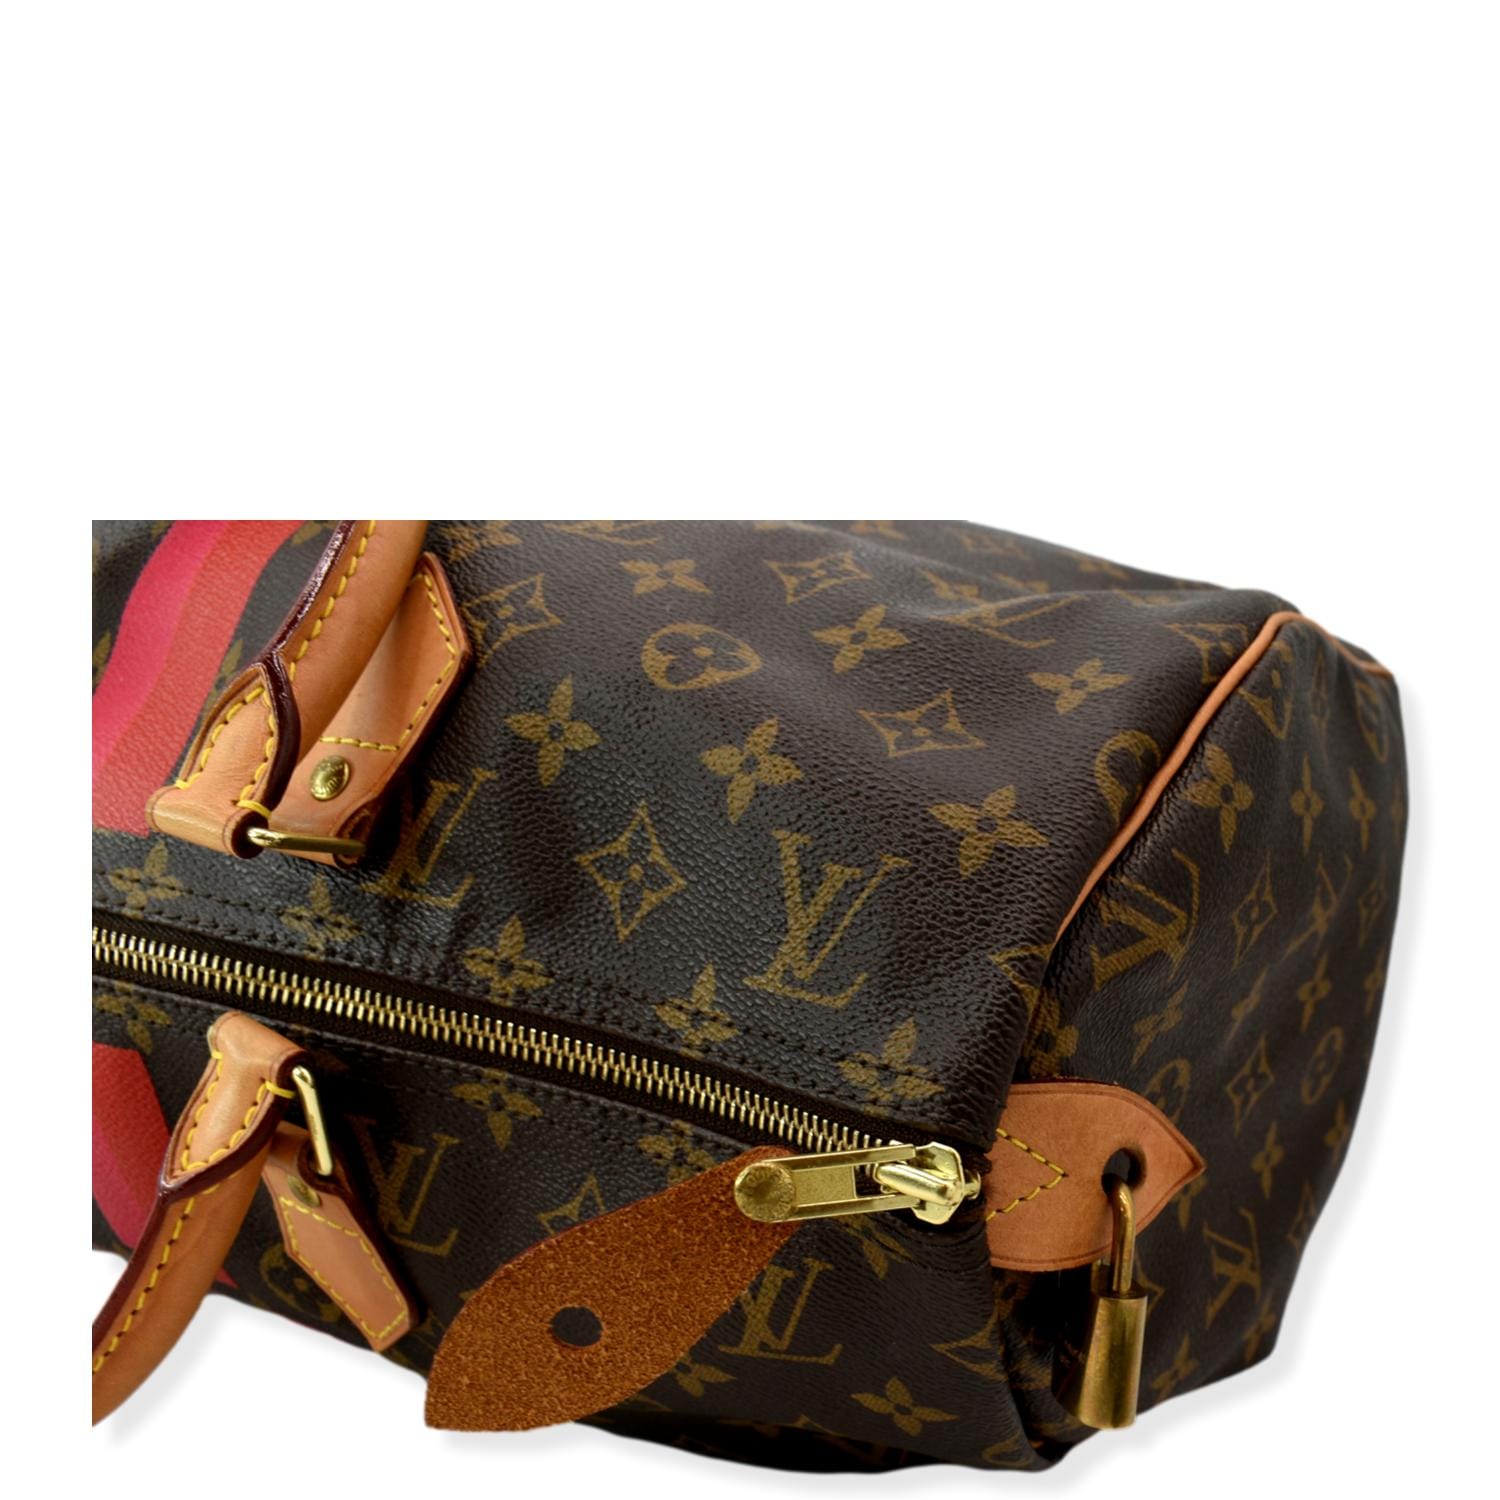 LOUIS VUITTON Speedy 40 Travel Hand Bag Monogram Leather Brown